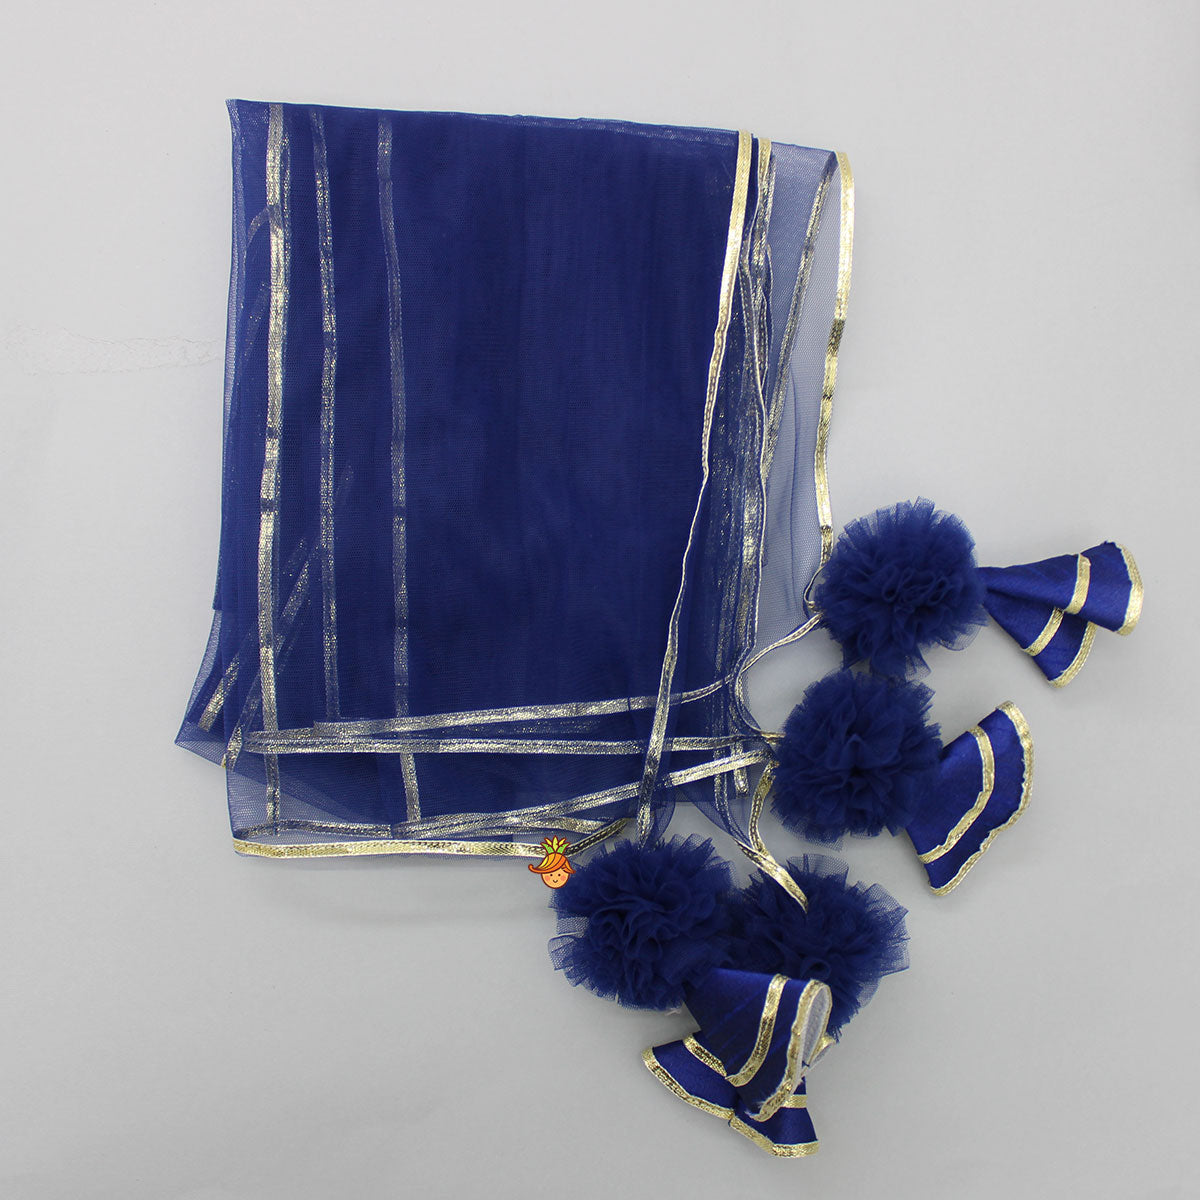 Gota Lace Detail Charming Blue Top And Lehenga With Net Dupatta